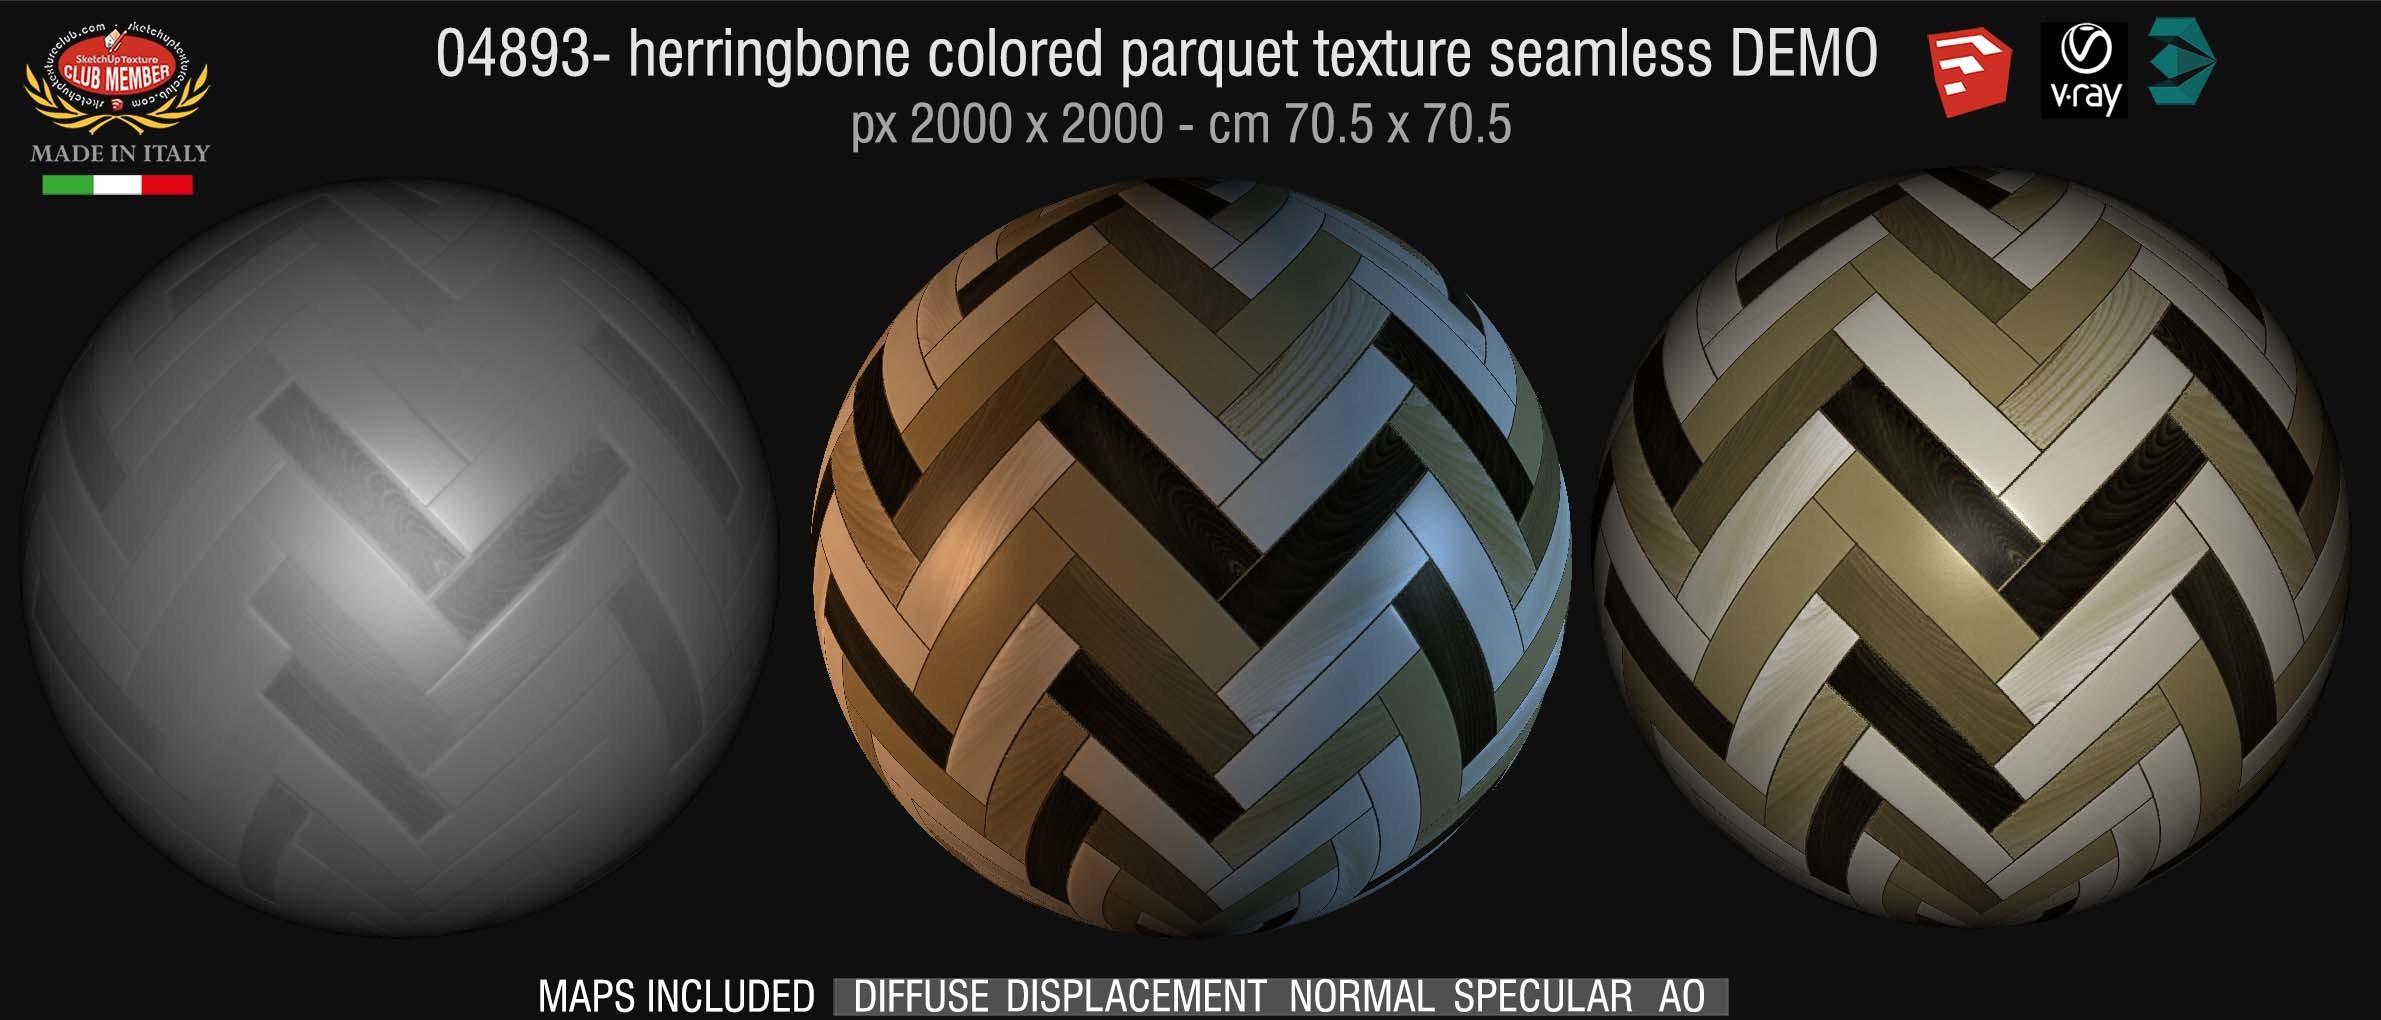 04893 HR Herringbone colored parquet texture seamless + maps DEMO